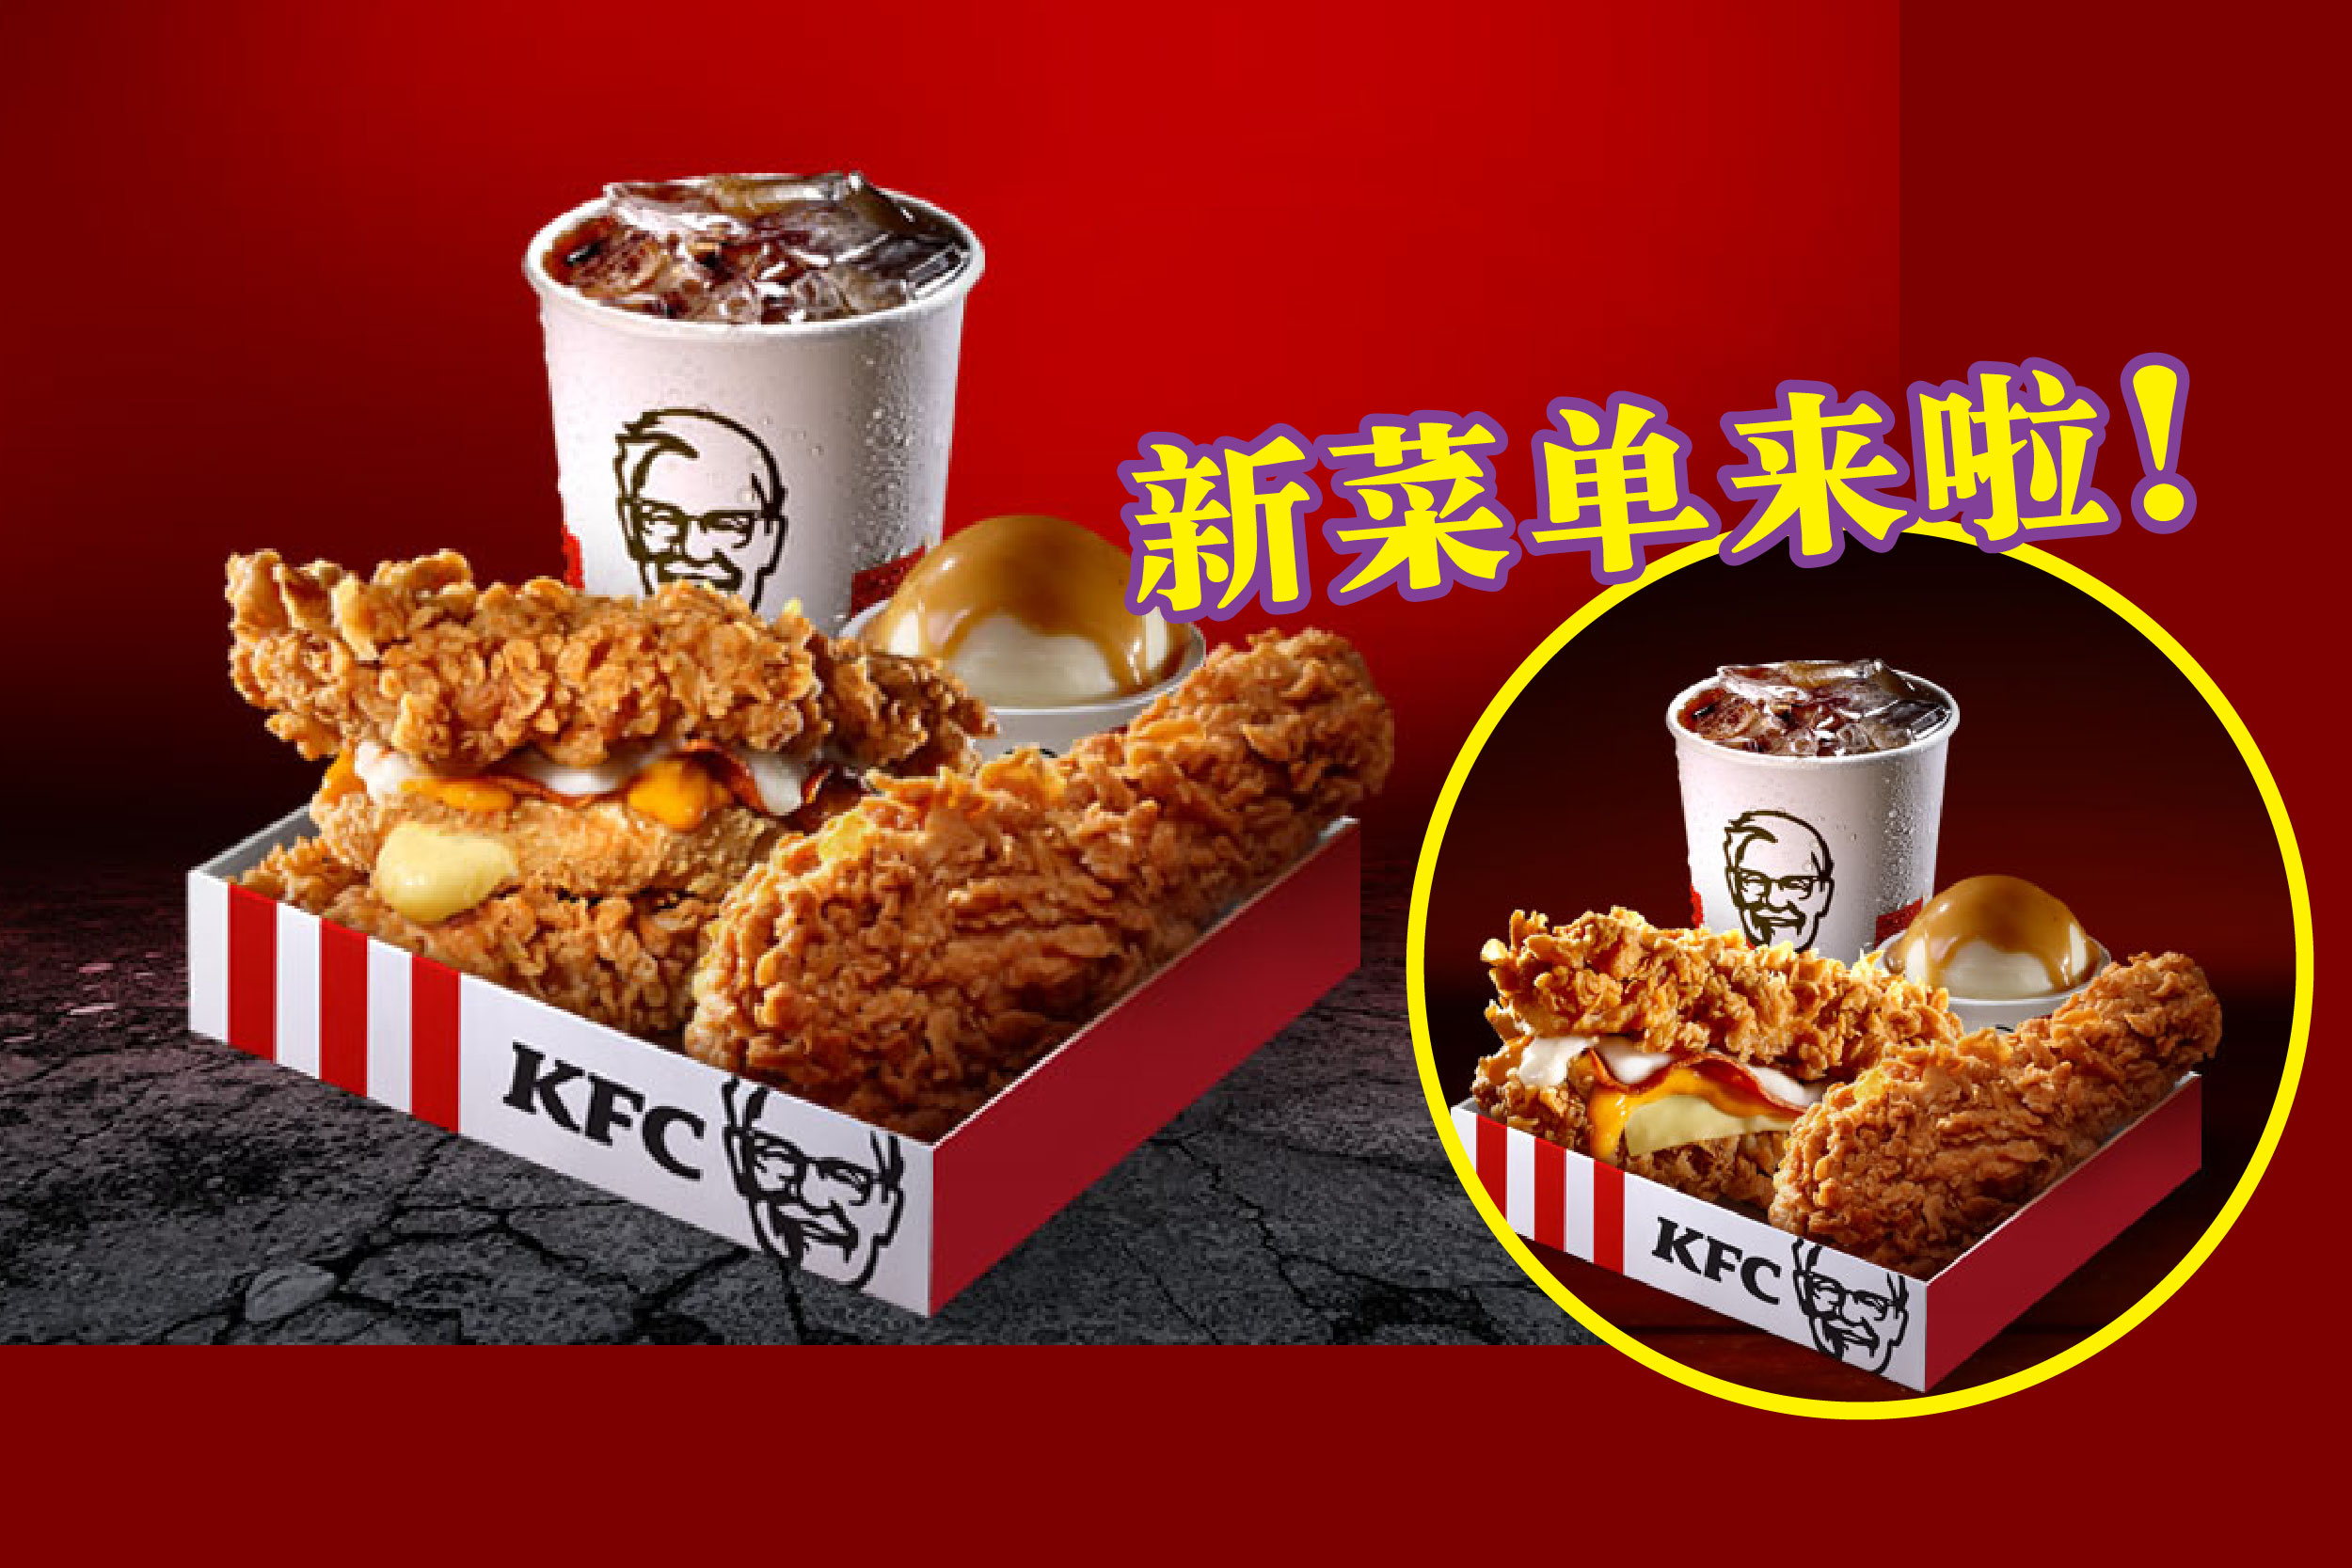 Double down cheezilla kfc KFC's Zinger